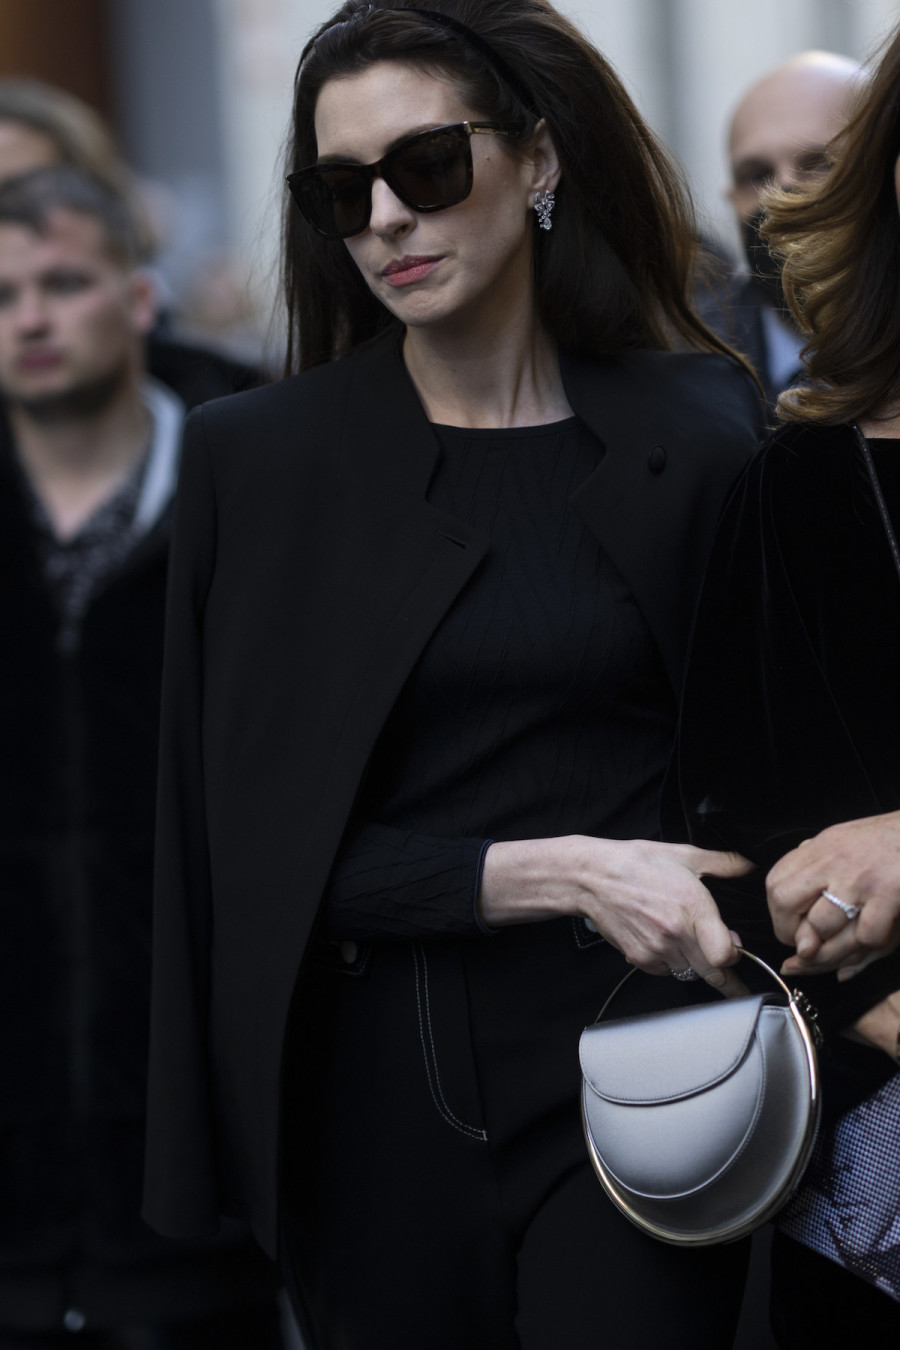 Anne Hathaway 2023 CFDA Fashion Awards